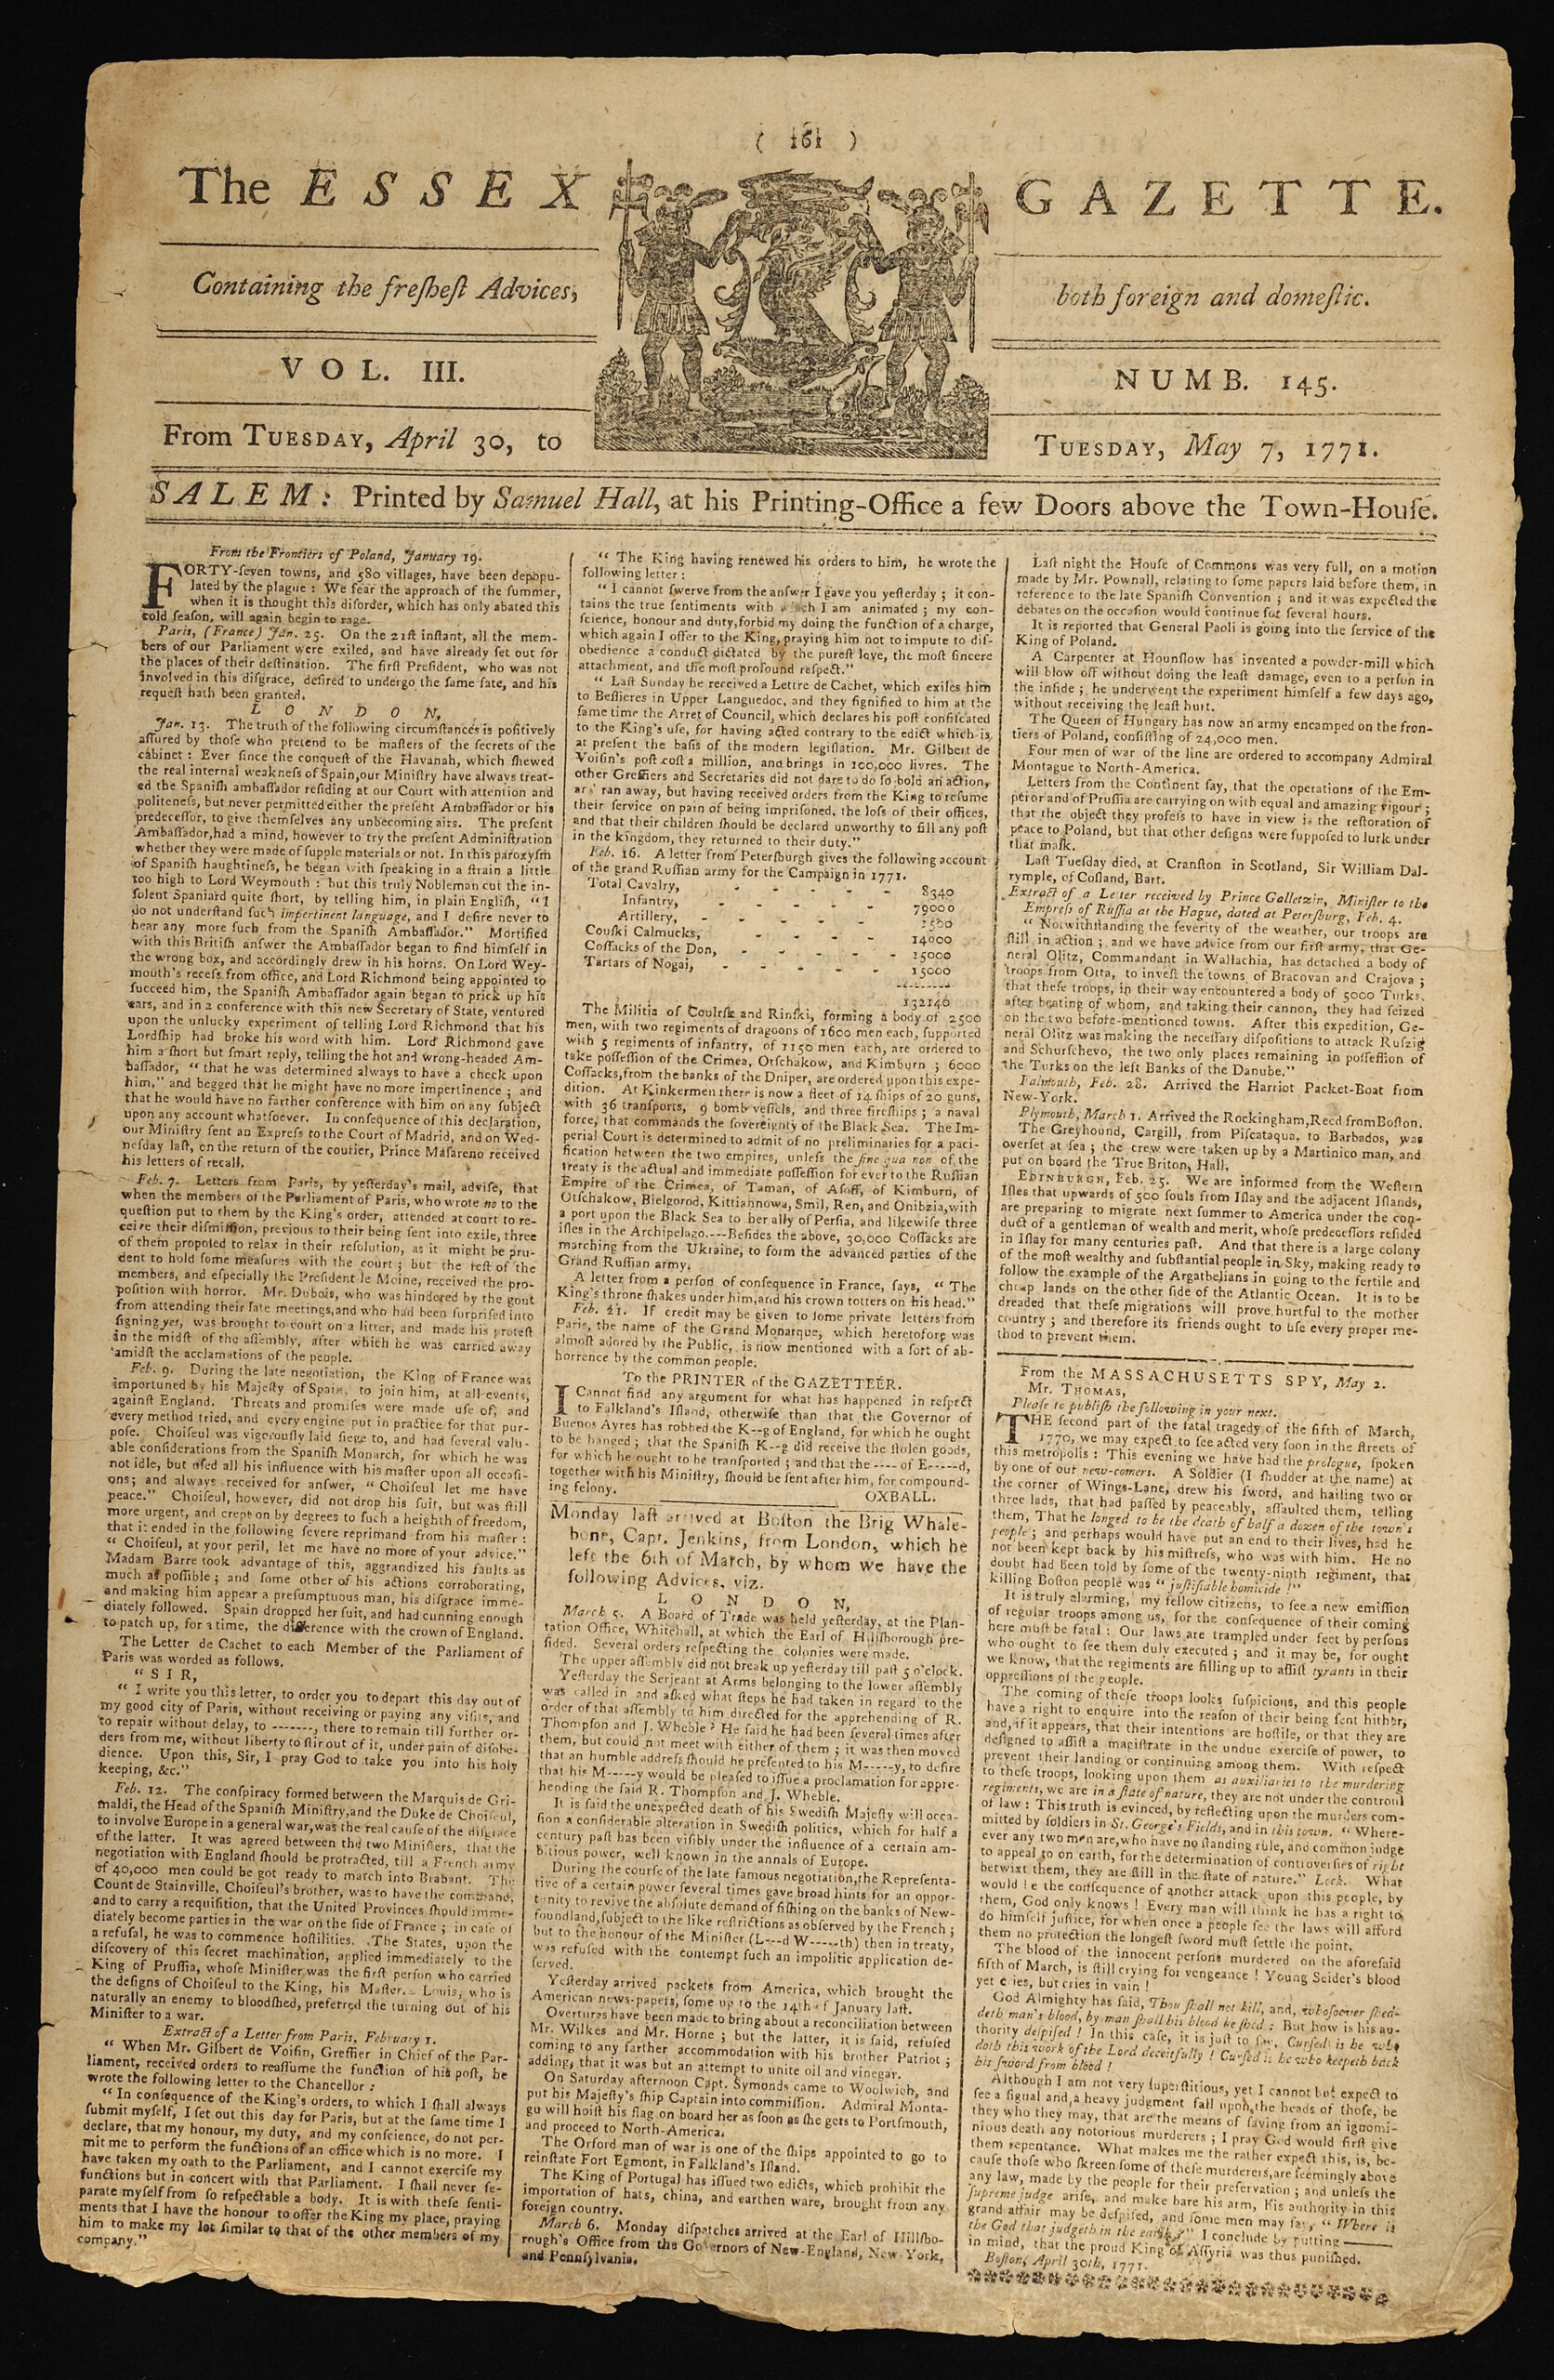 The Essex Gazette  Salem: S. Hall, April 30-May 7, 1771